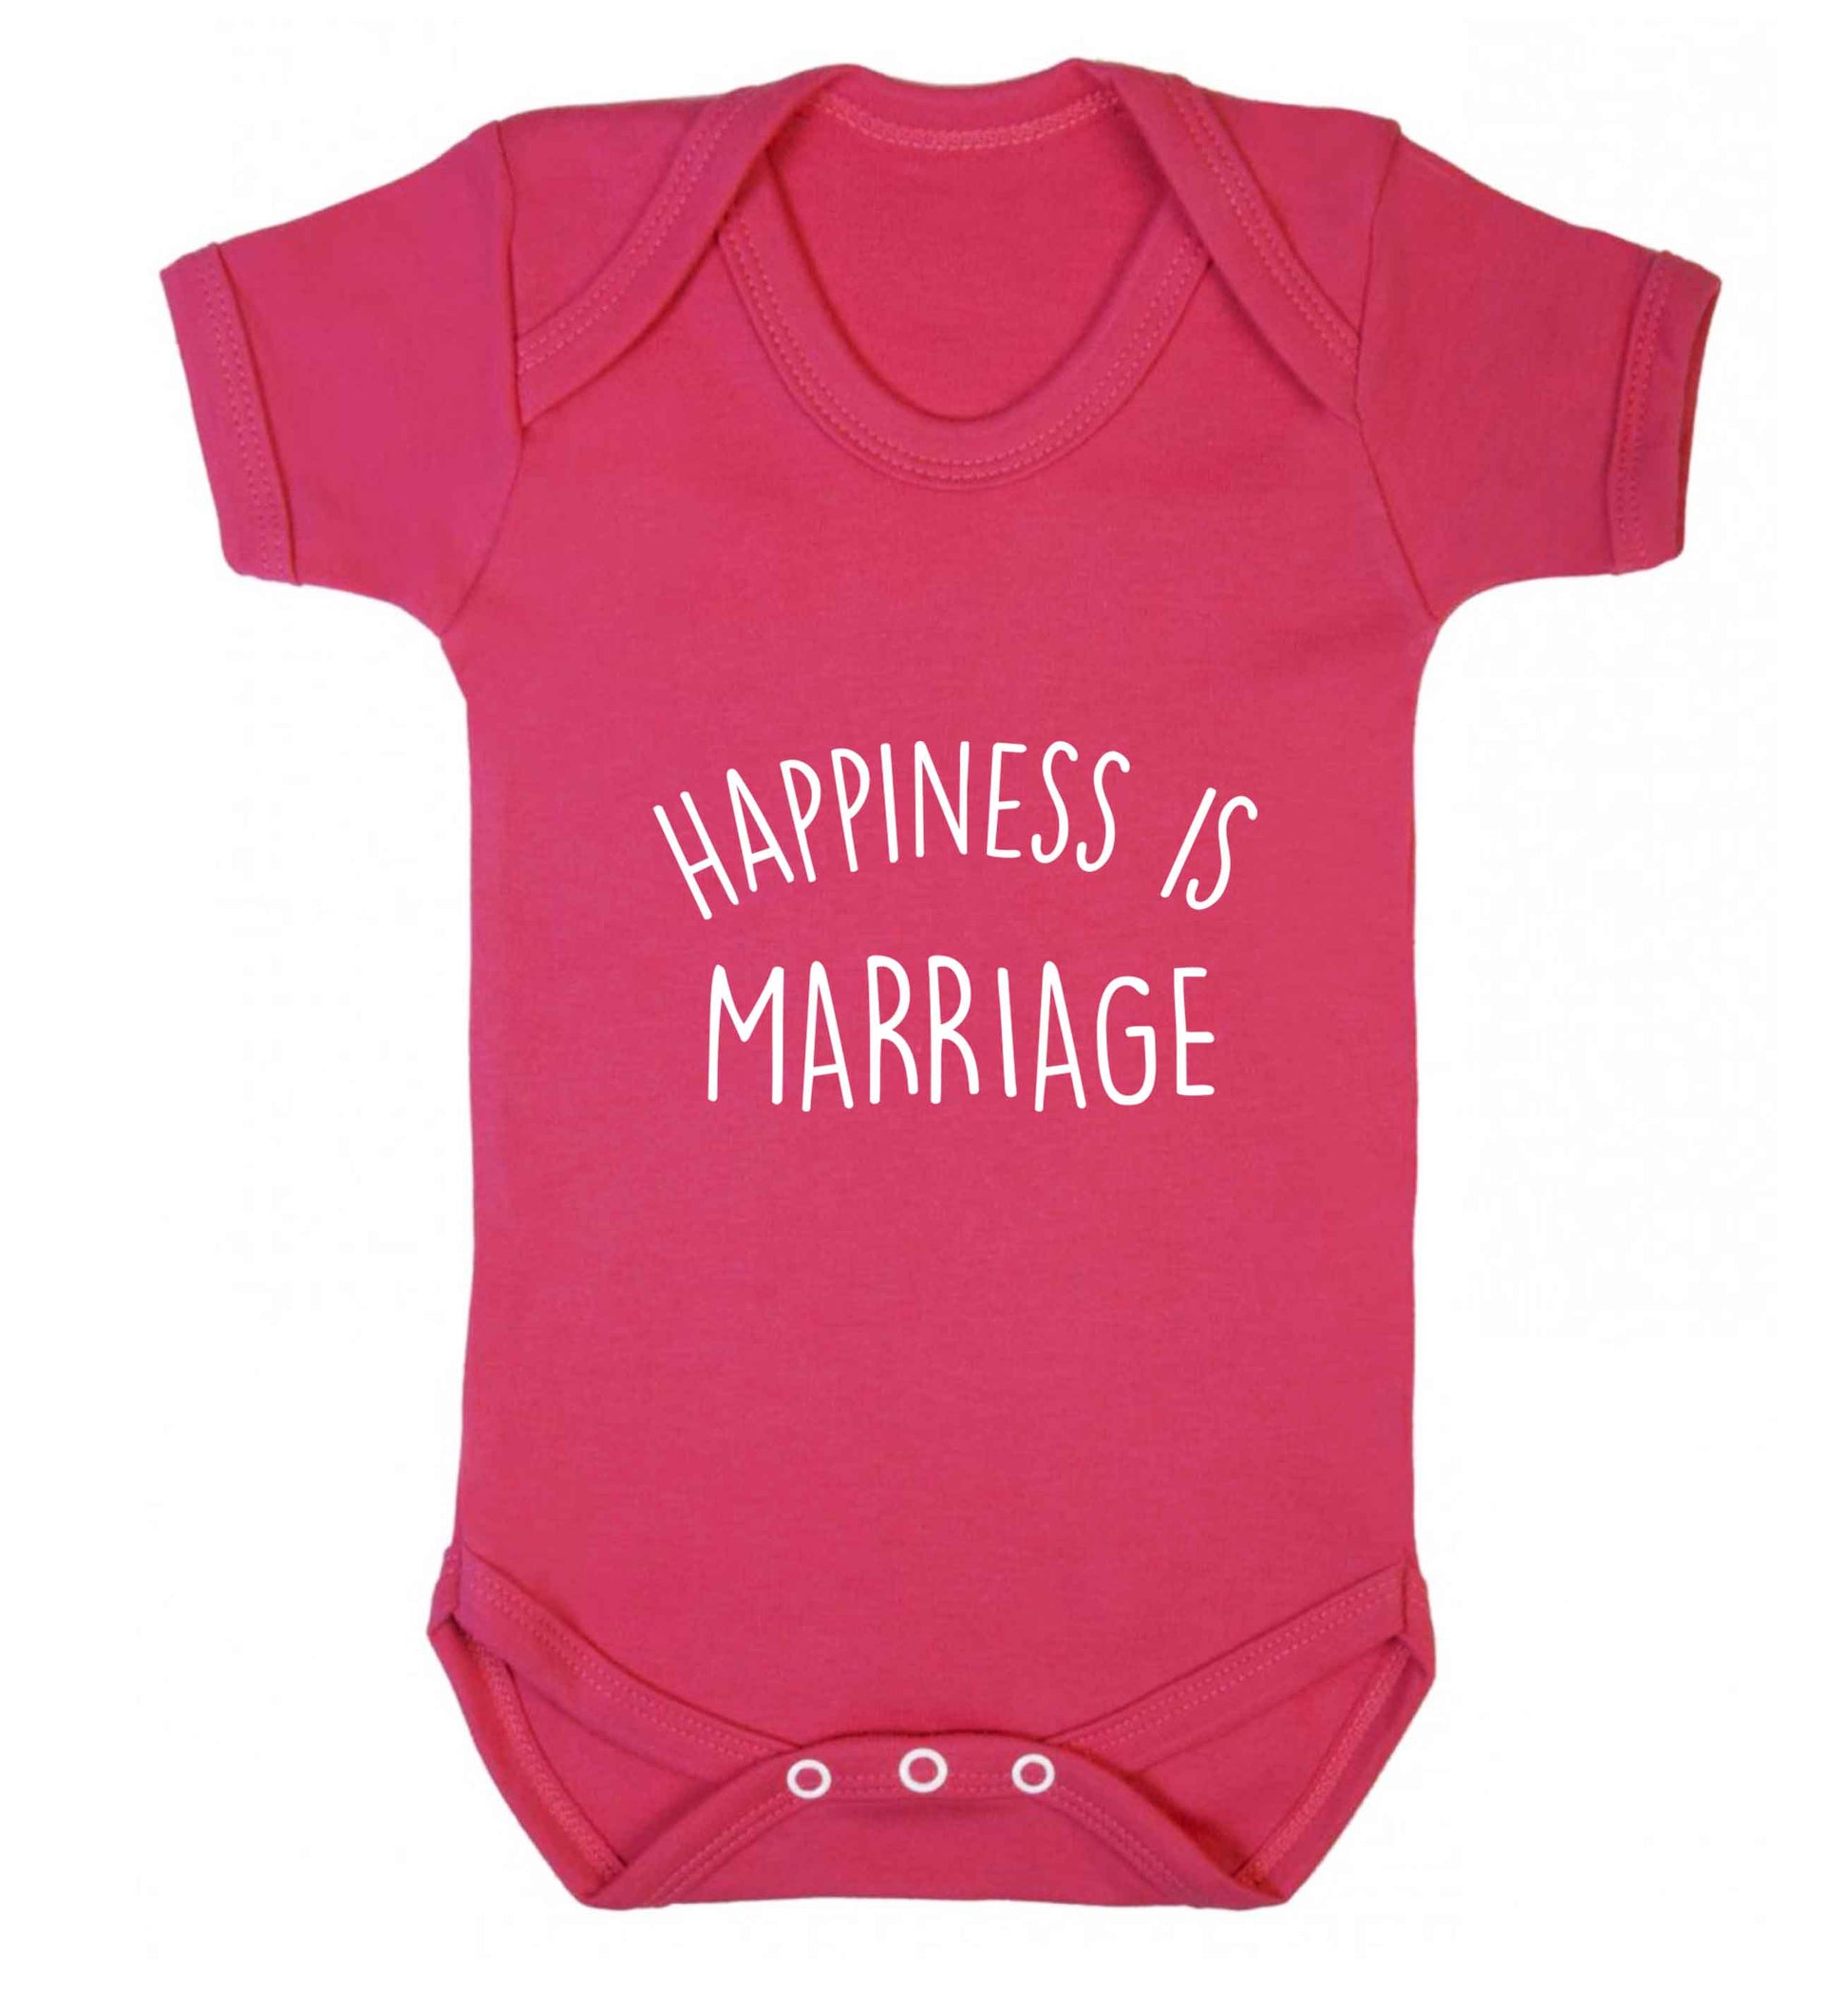 Happiness is marriage baby vest dark pink 18-24 months